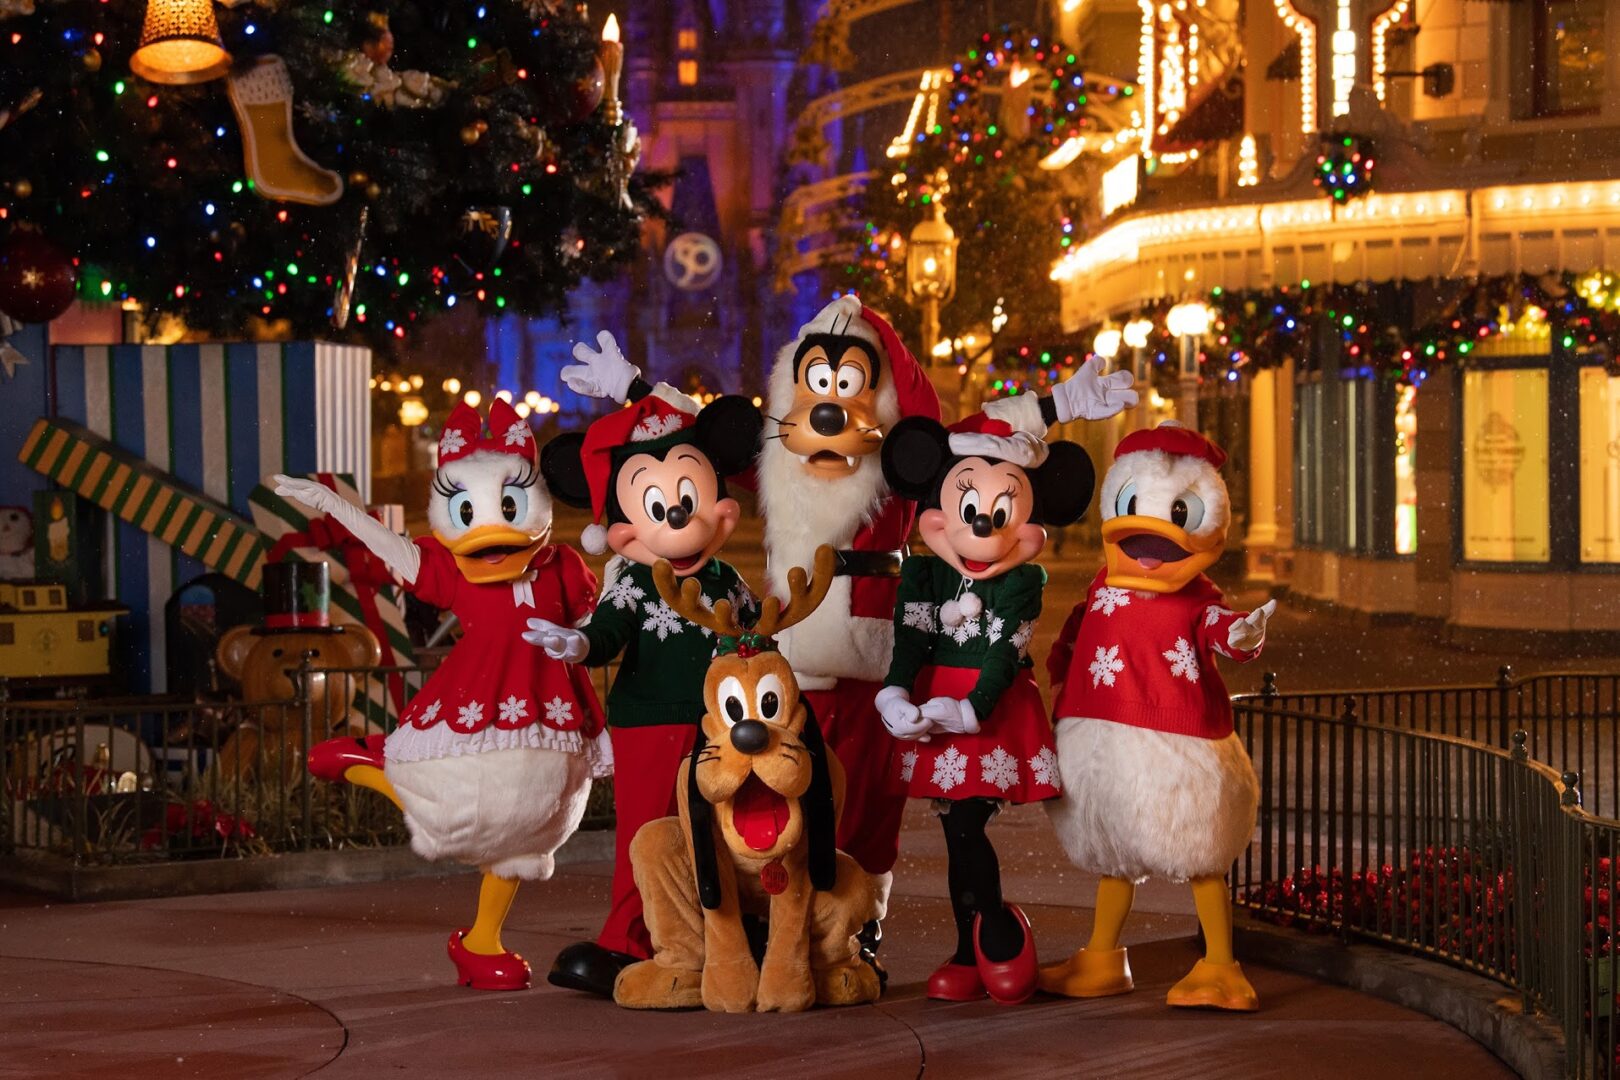 Save Up to 25% on Rooms at Select Disney World Resort Hotels this Holiday Season